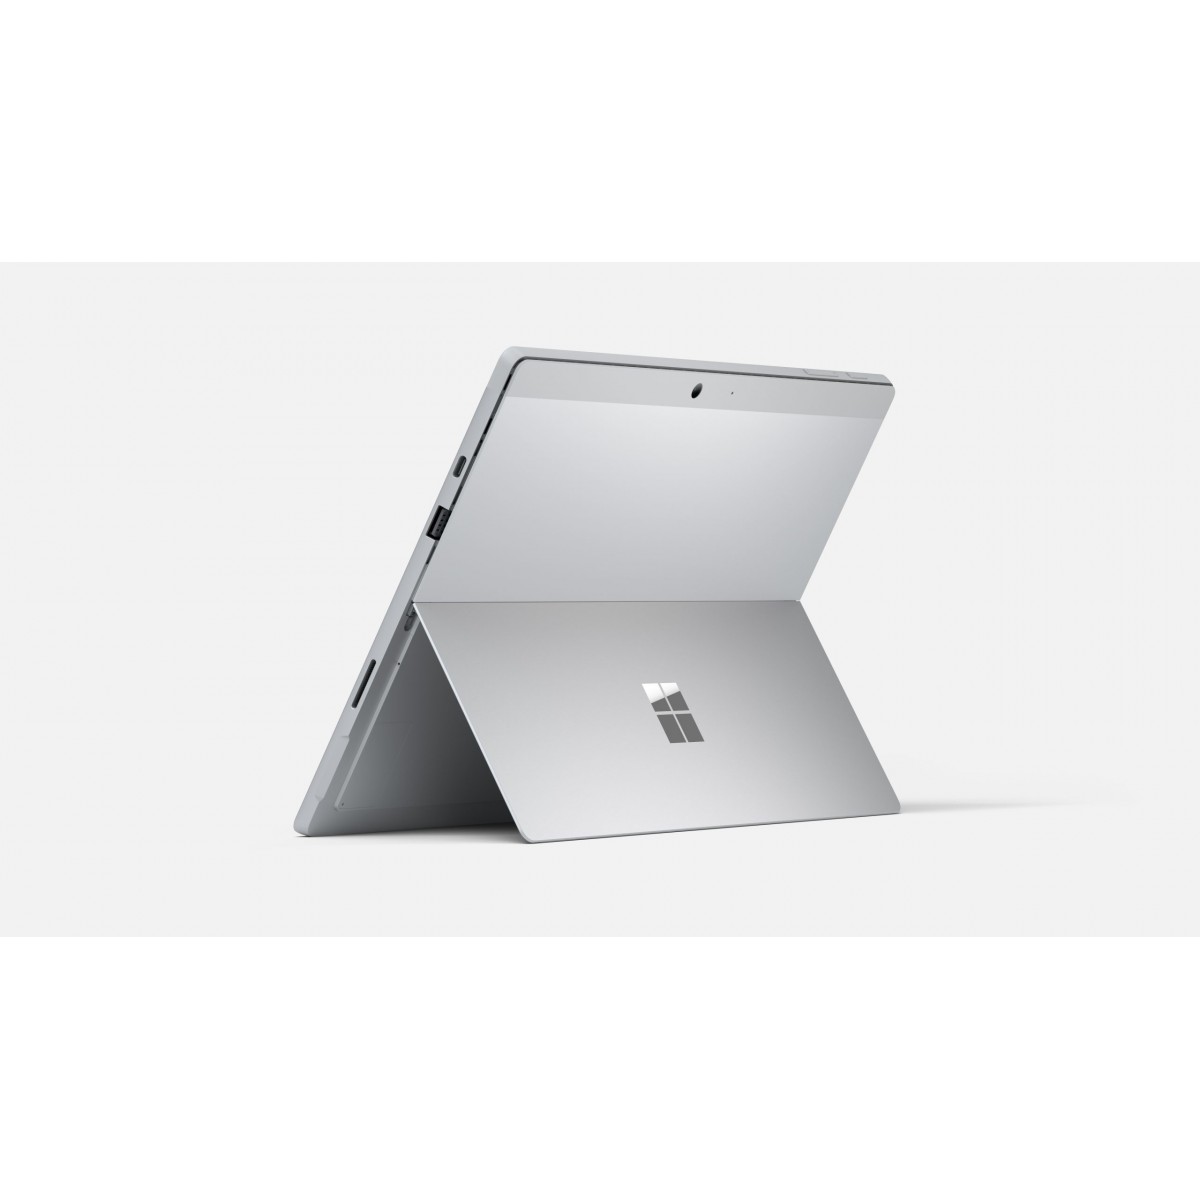 Surface Pro 7+ - 12.3inch - i5 - 8 GB RAM - 256 GB SSD - LTE - Win 10 PRO - Platinum